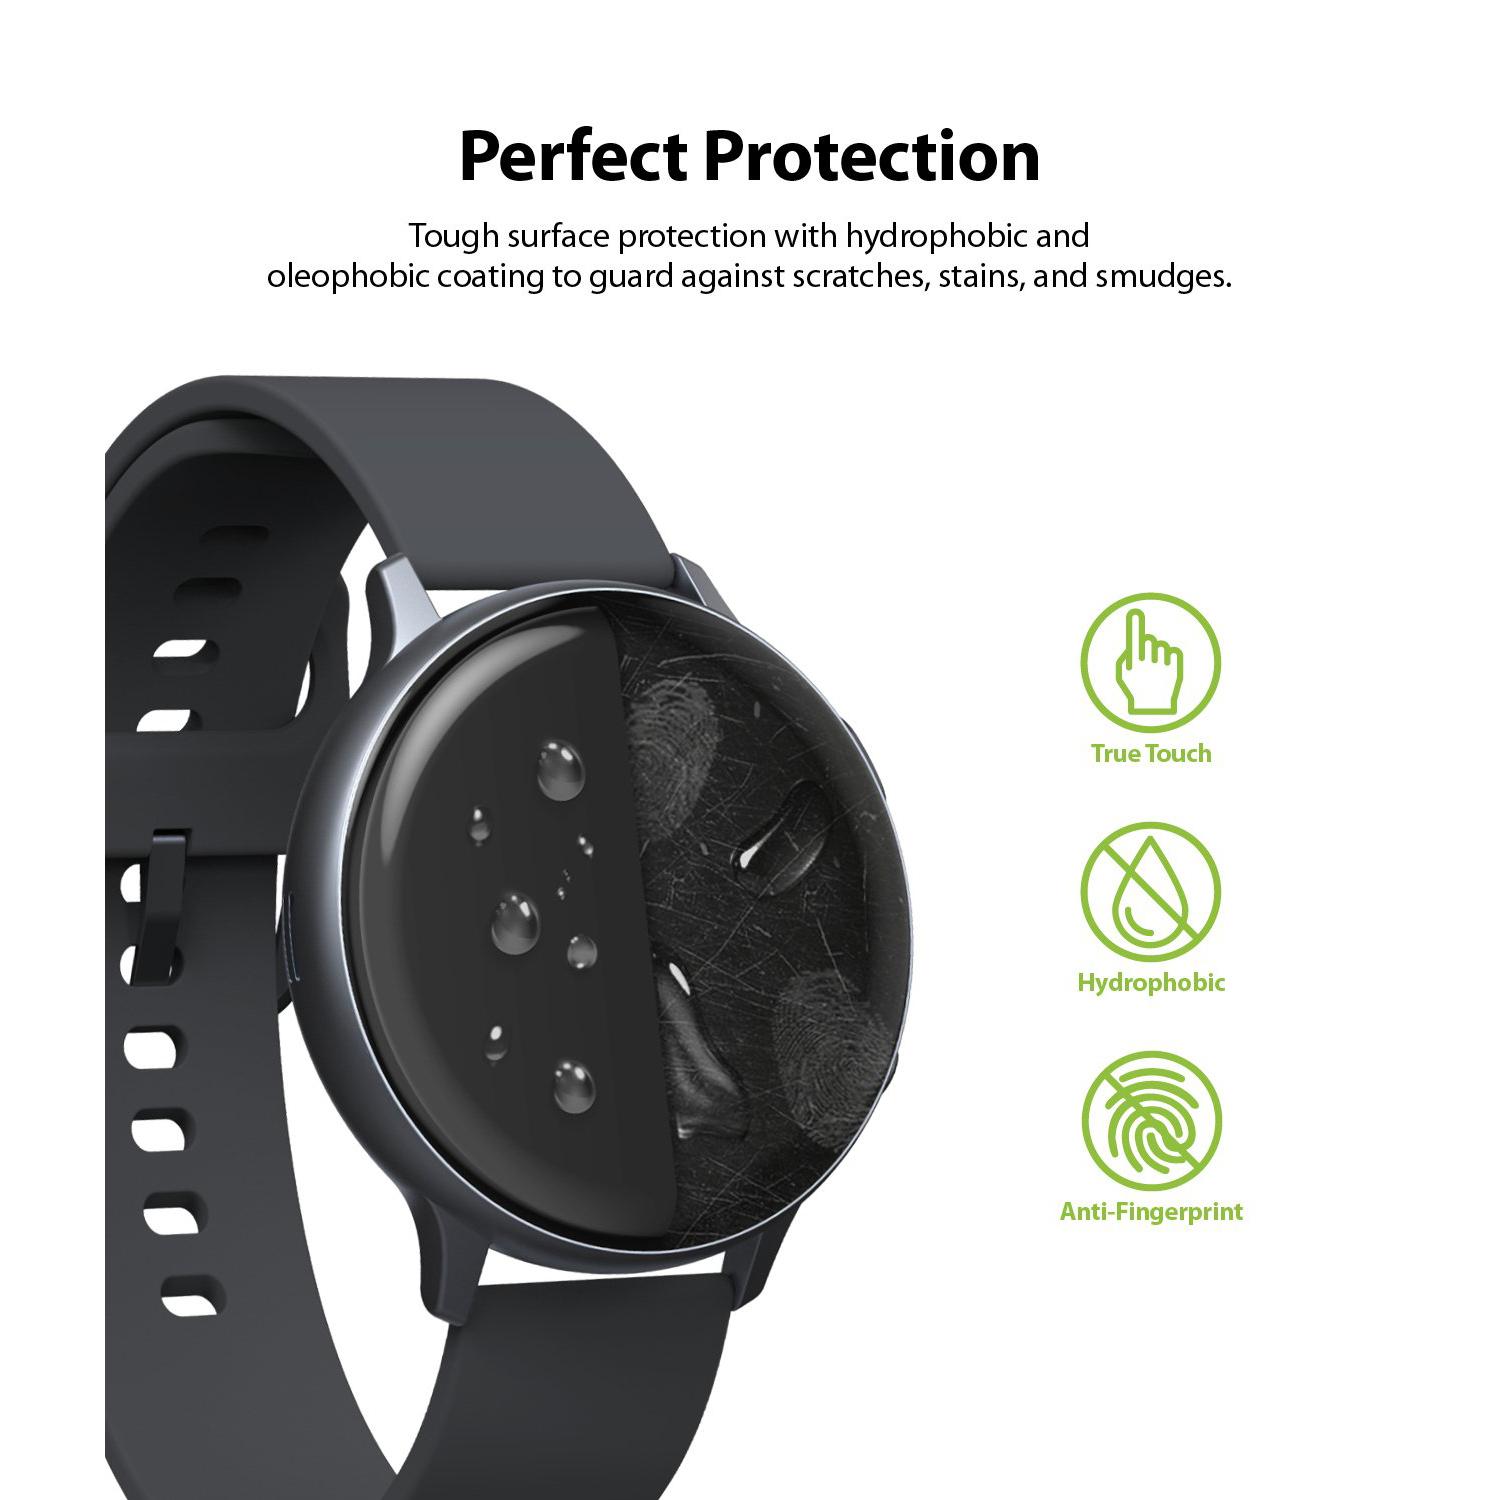 Easy Flex (3-pack) Samsung Galaxy Watch Active 1/2 40mm